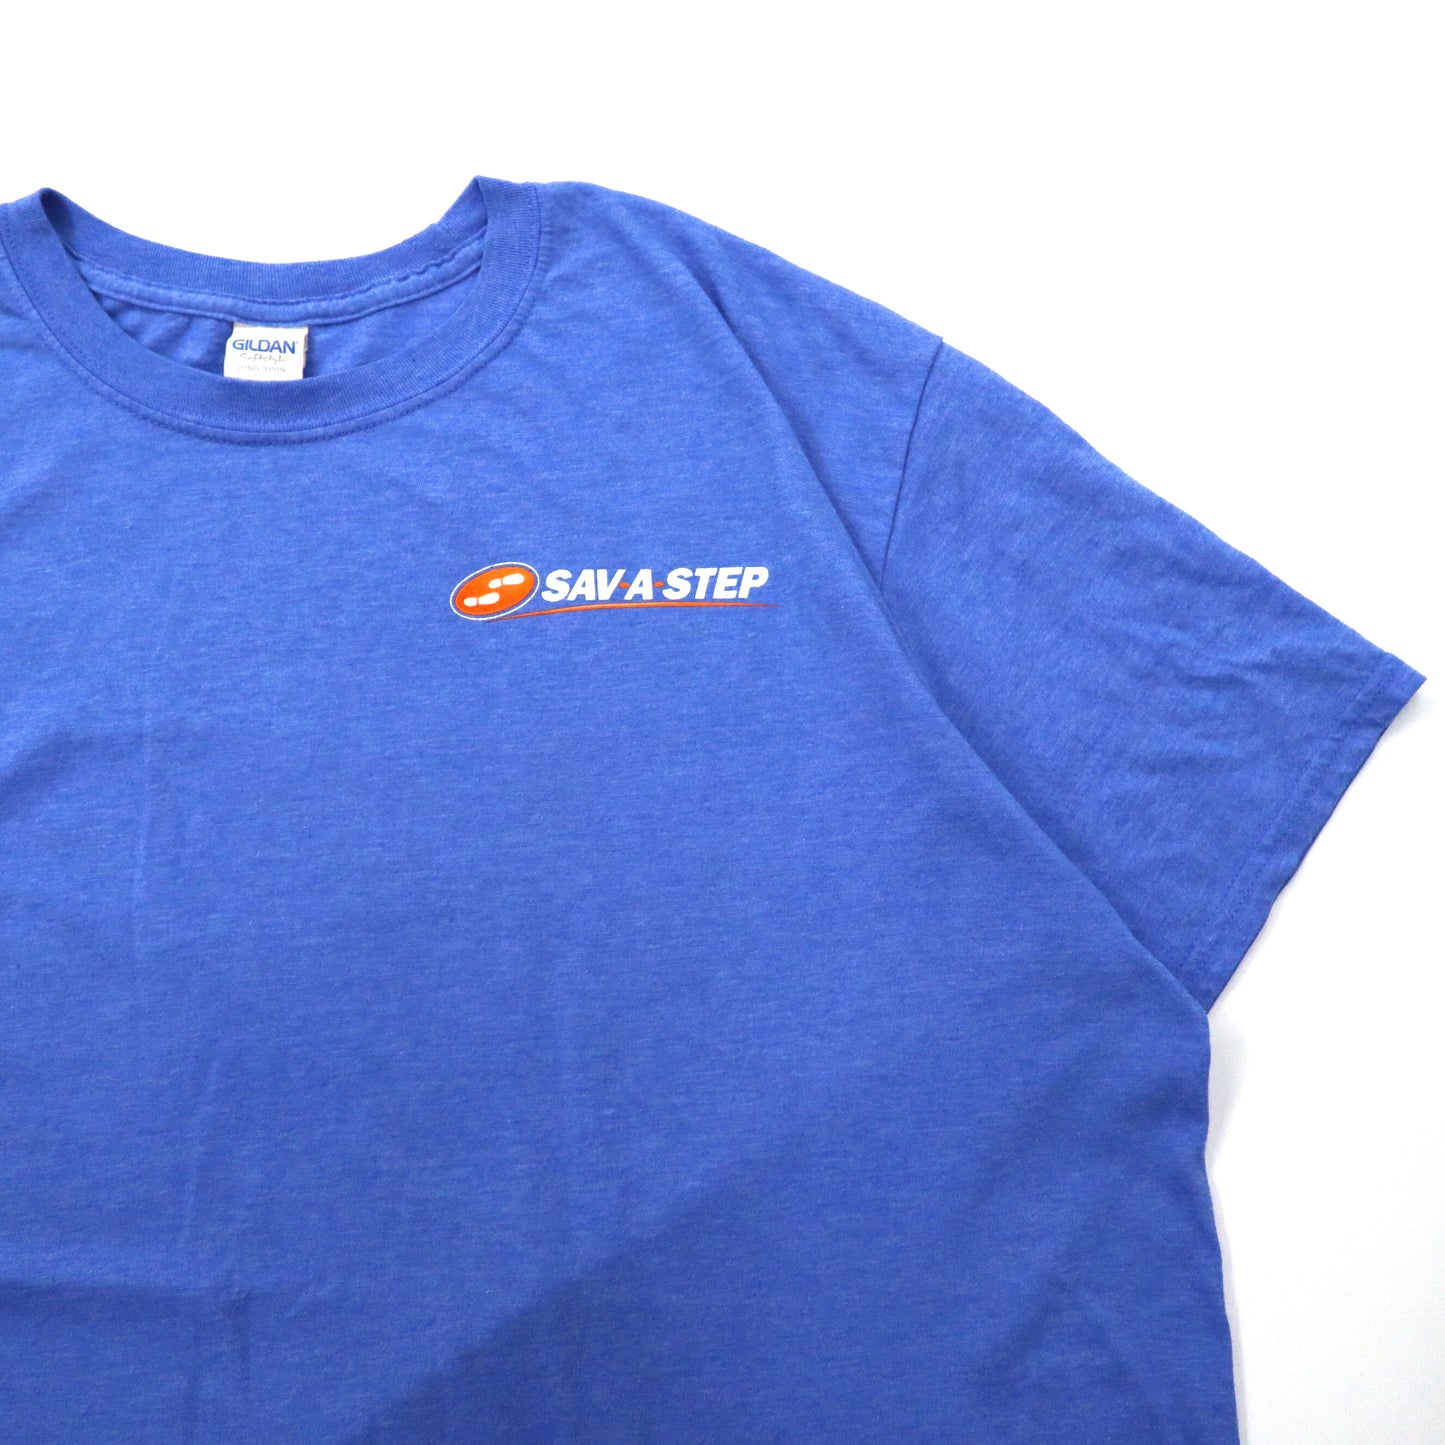 GILDAN ビッグサイズ プリントTシャツ 2XL ブルー コットン SAV-A-STEP ニカラグア製